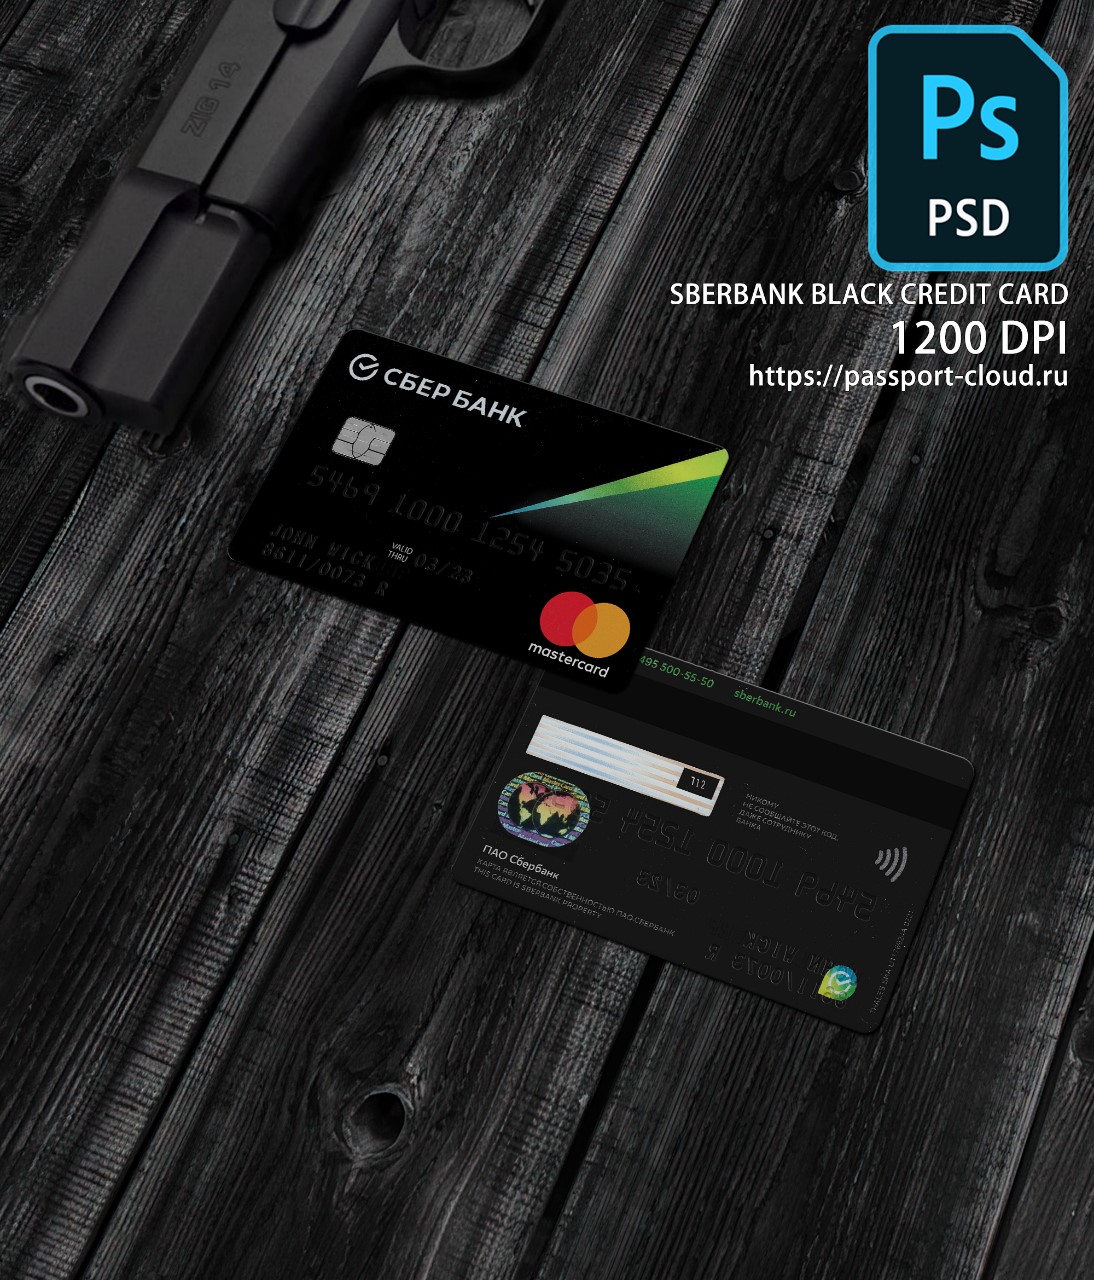 Sberbank Credit Card PSD1